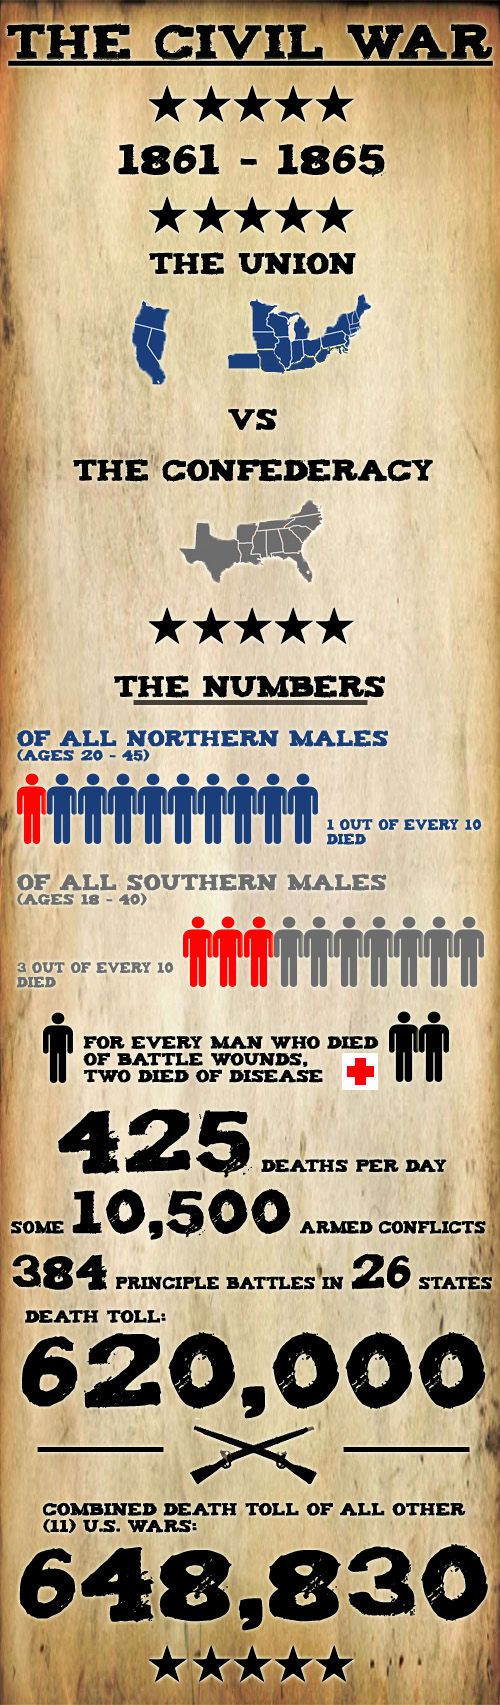 US Civil War infographic poster.